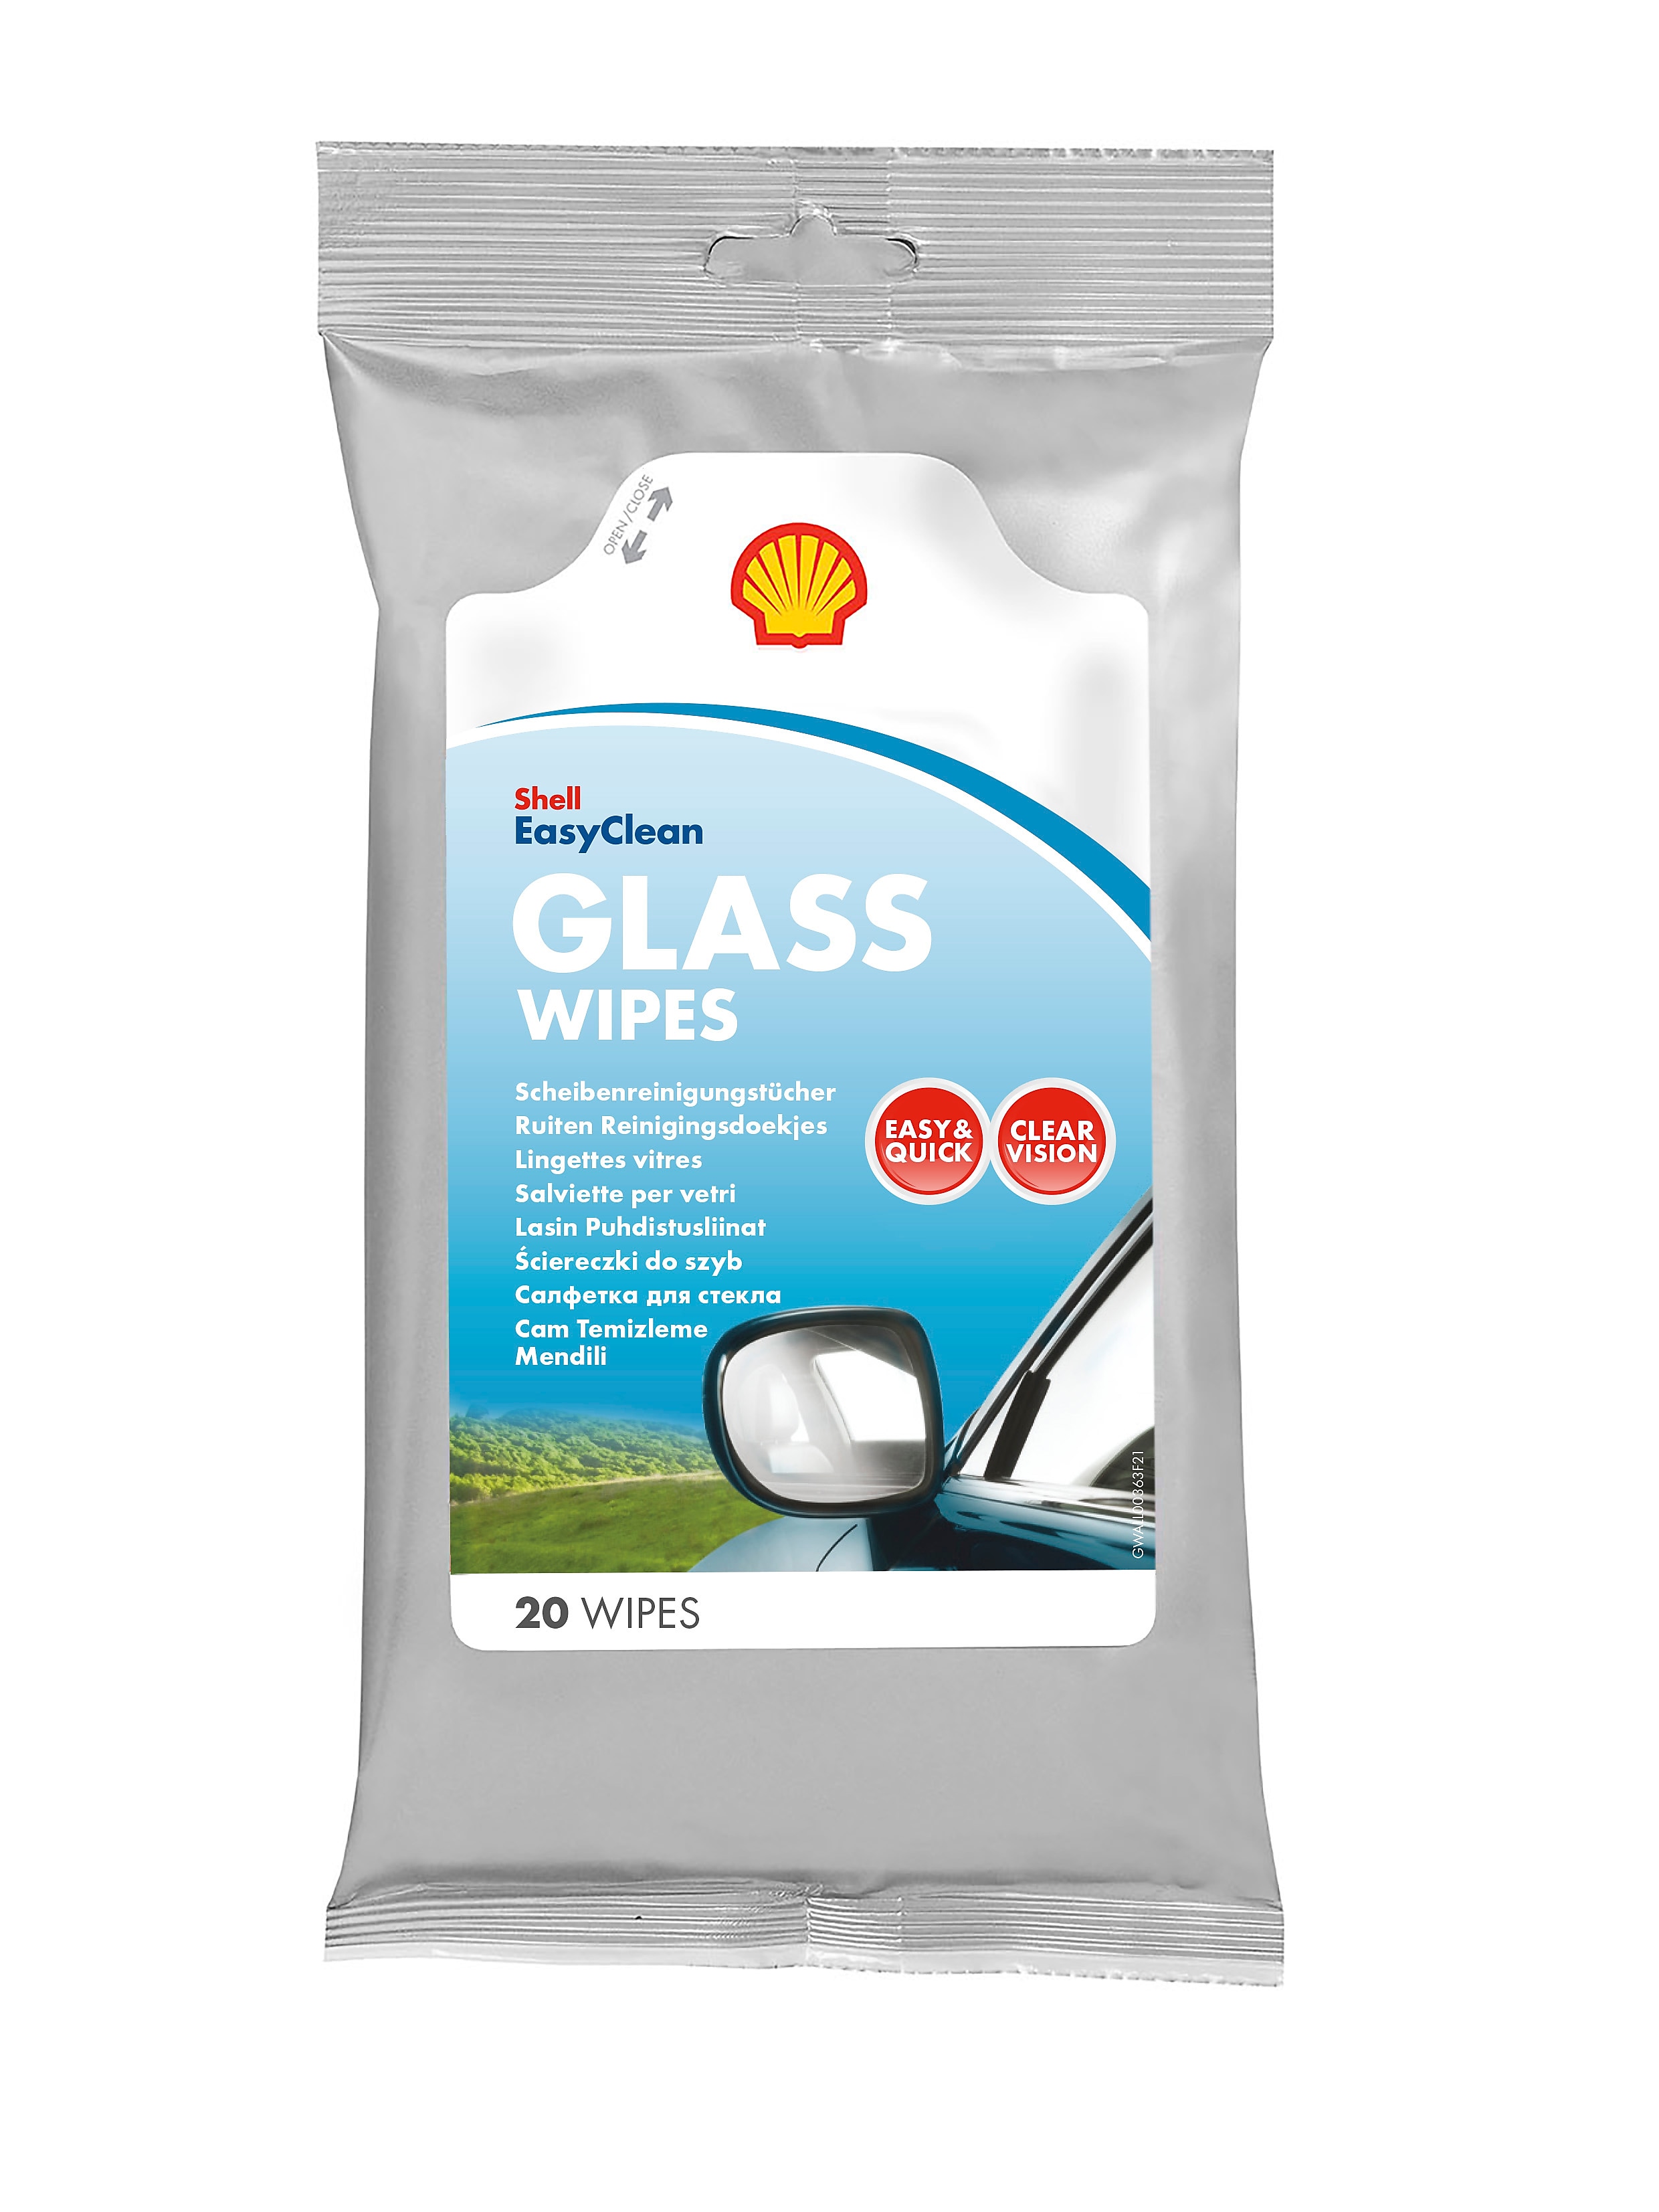 HOPES Perfect Glass Cleaner Spray, Streak-Free, Ammonia-Free Window,  Mirror, Scr 